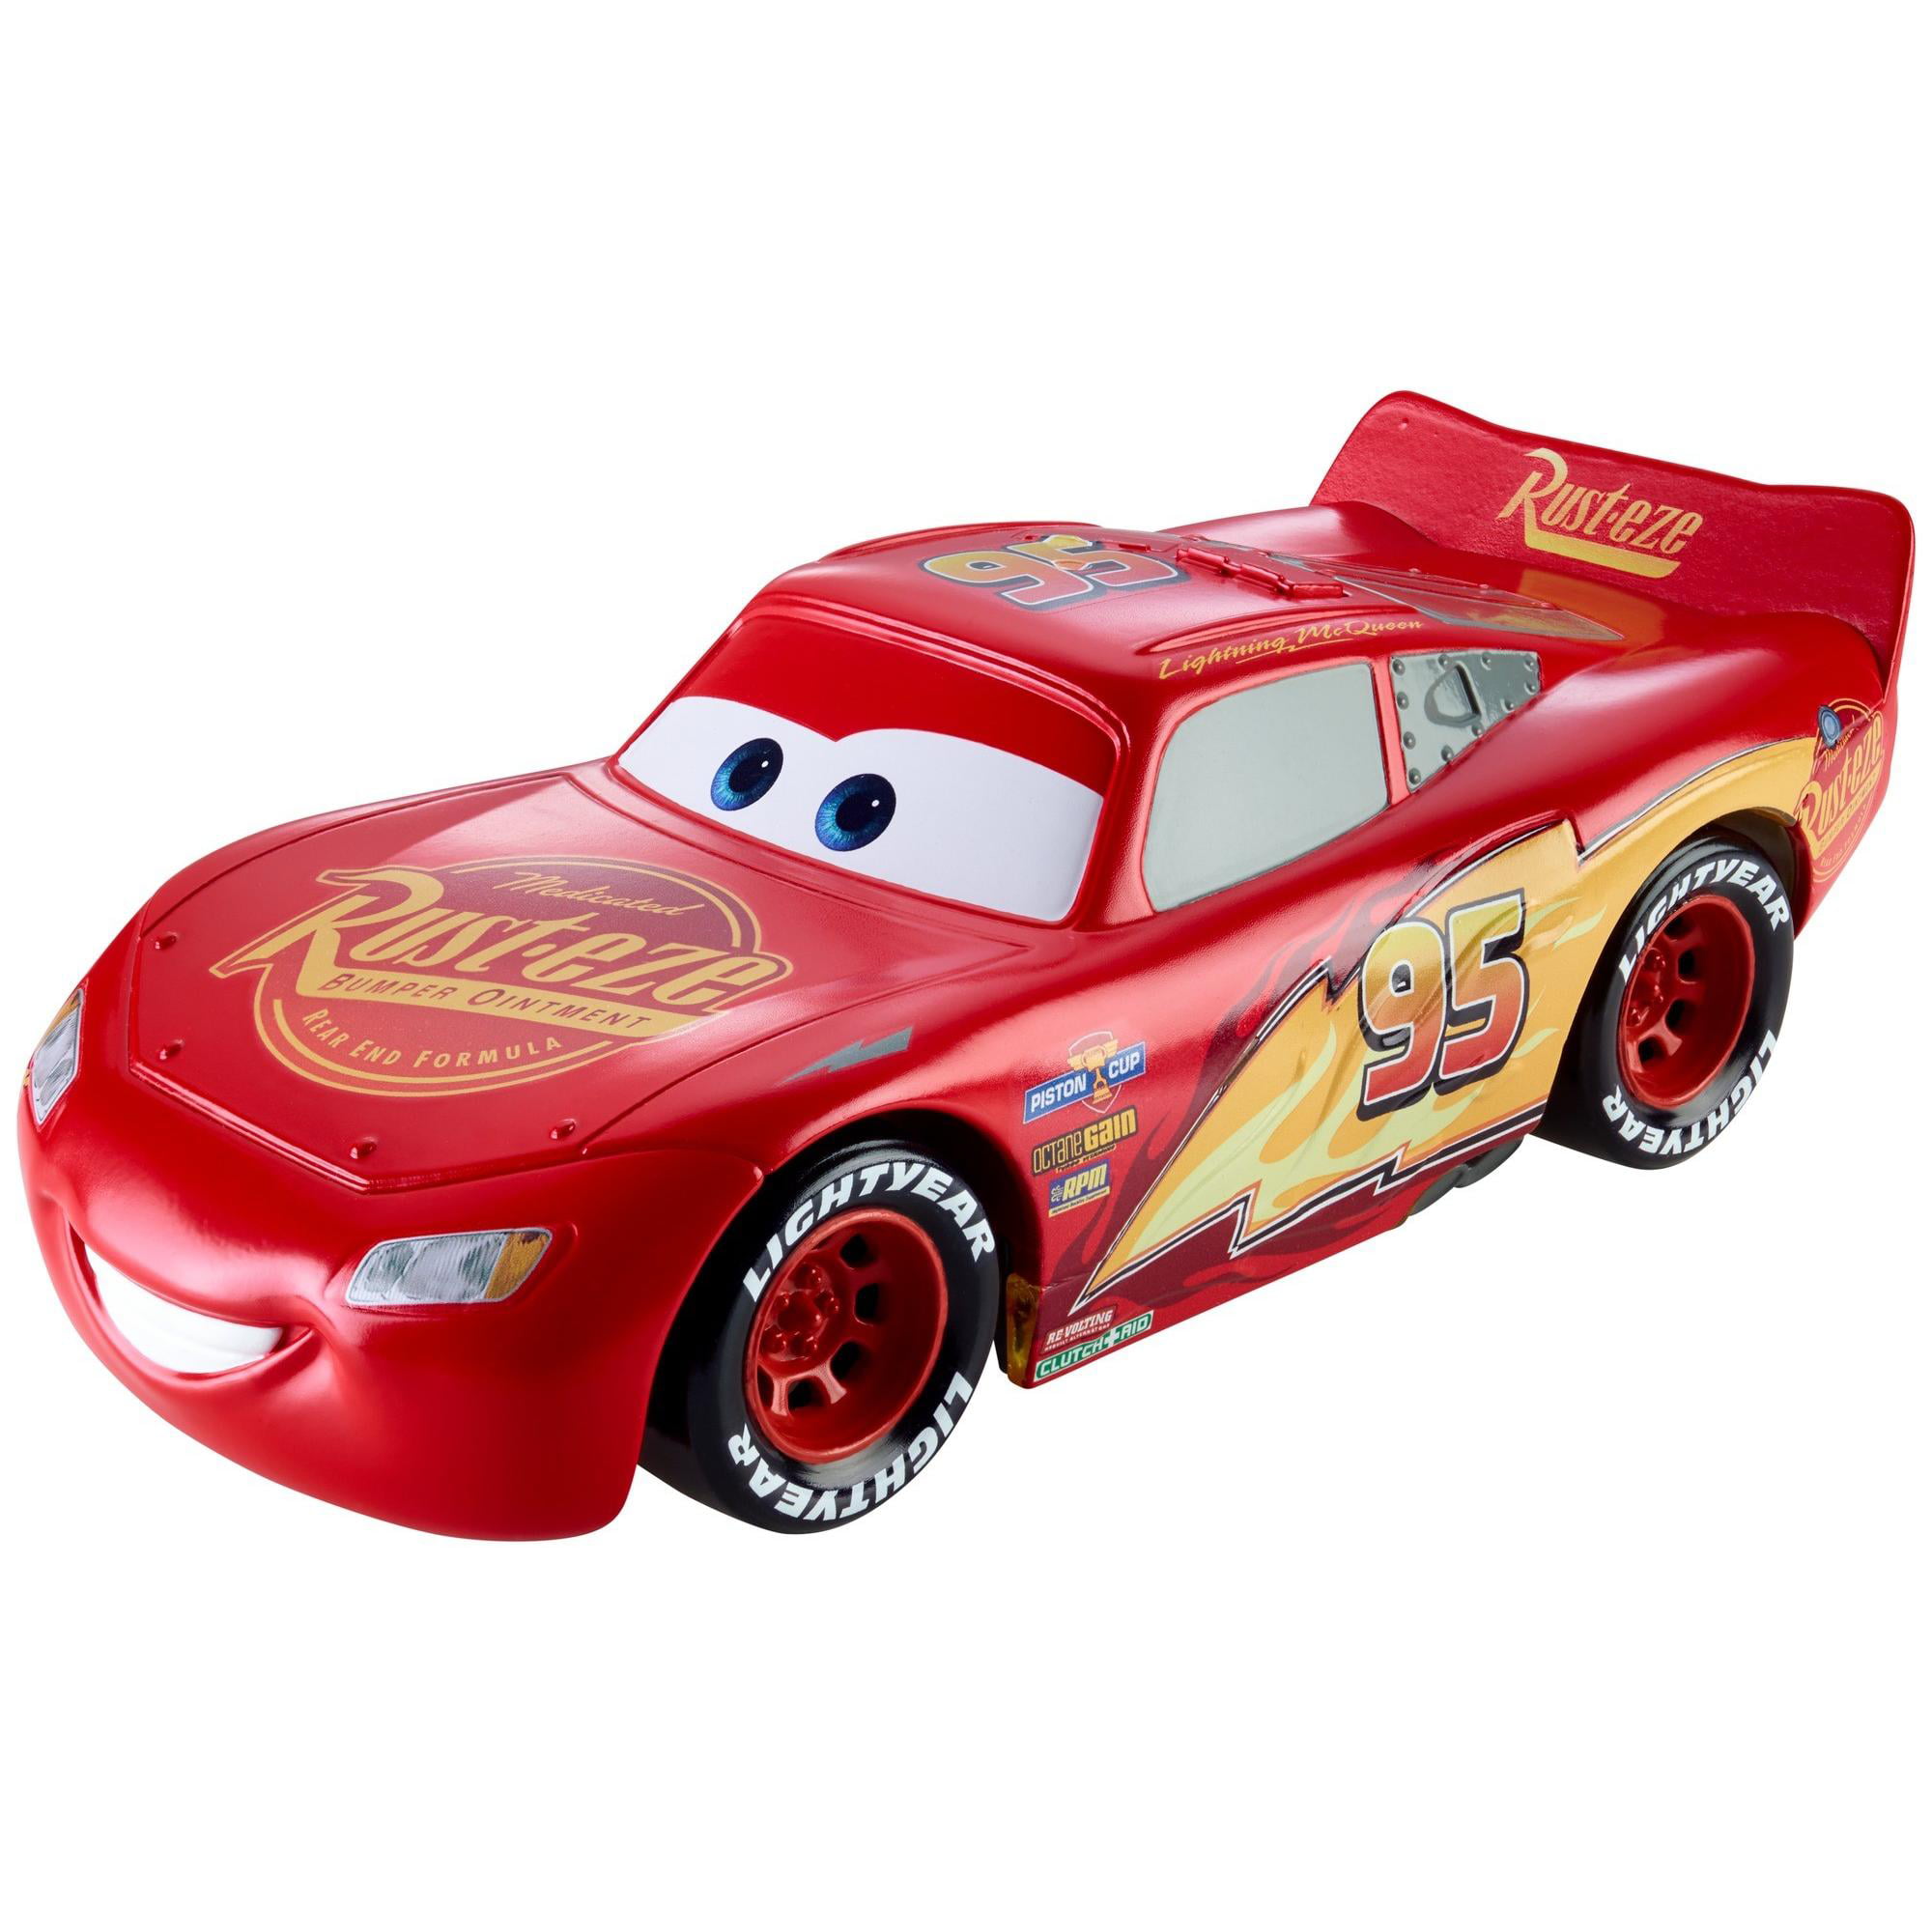 Disney Pixar Cars Piston Cup Racing Garage Toy Car Playset with Lightning McQueen Toy Car 